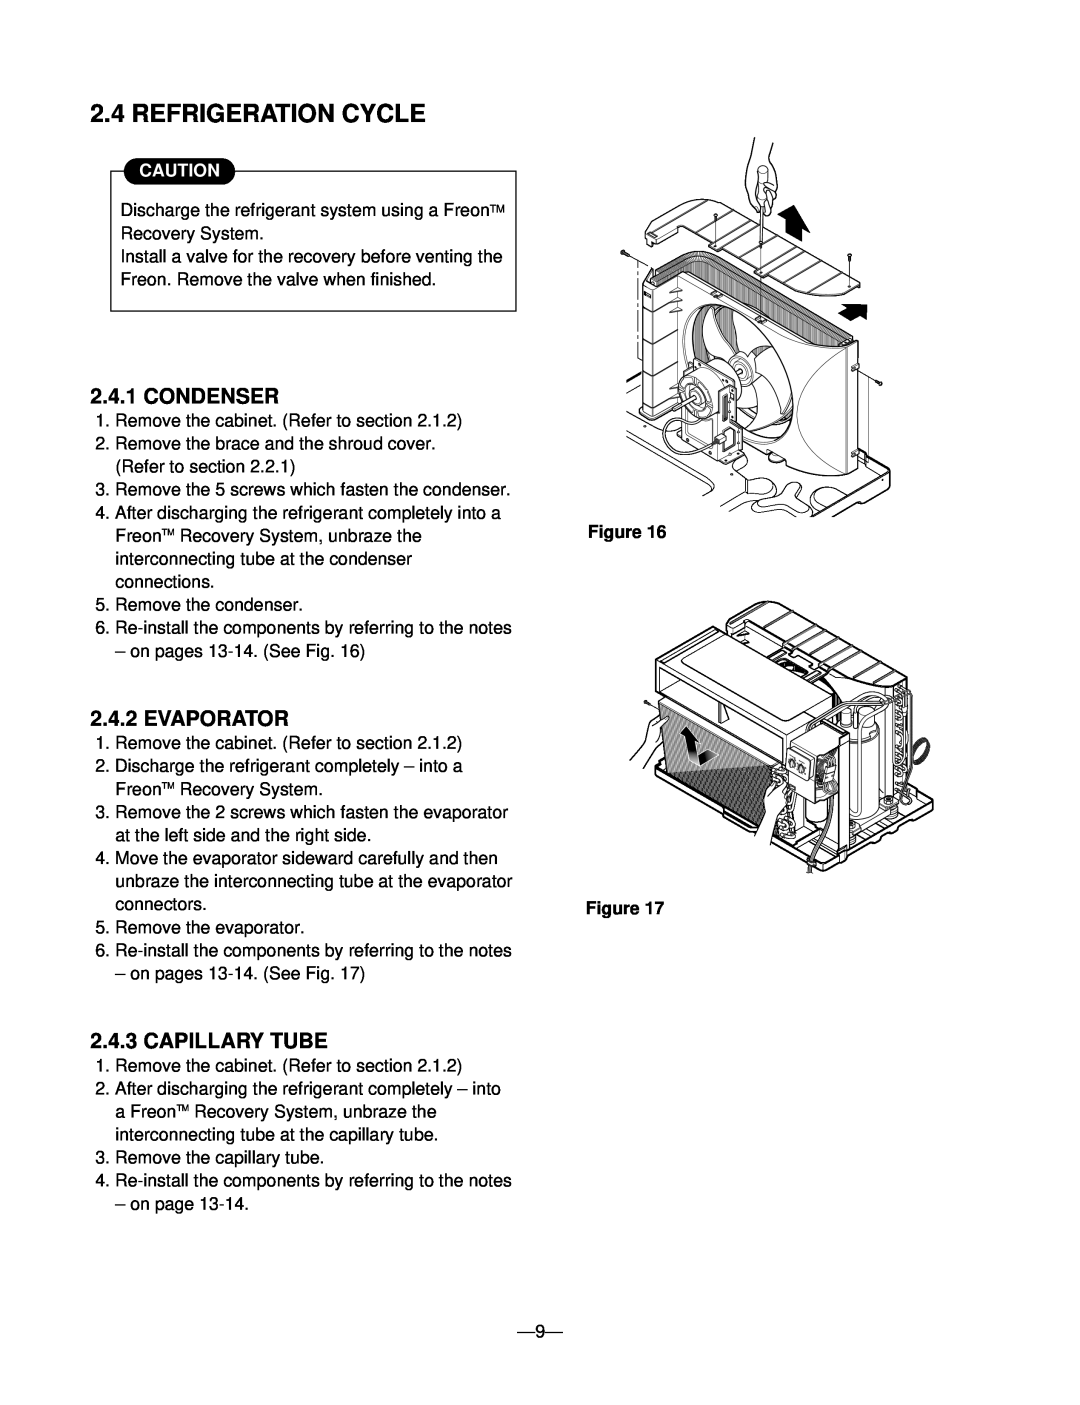 Friedrich UE12, UE10, UE08 manual Refrigeration Cycle, Condenser, Evaporator, Capillary Tube, Figure Figure 